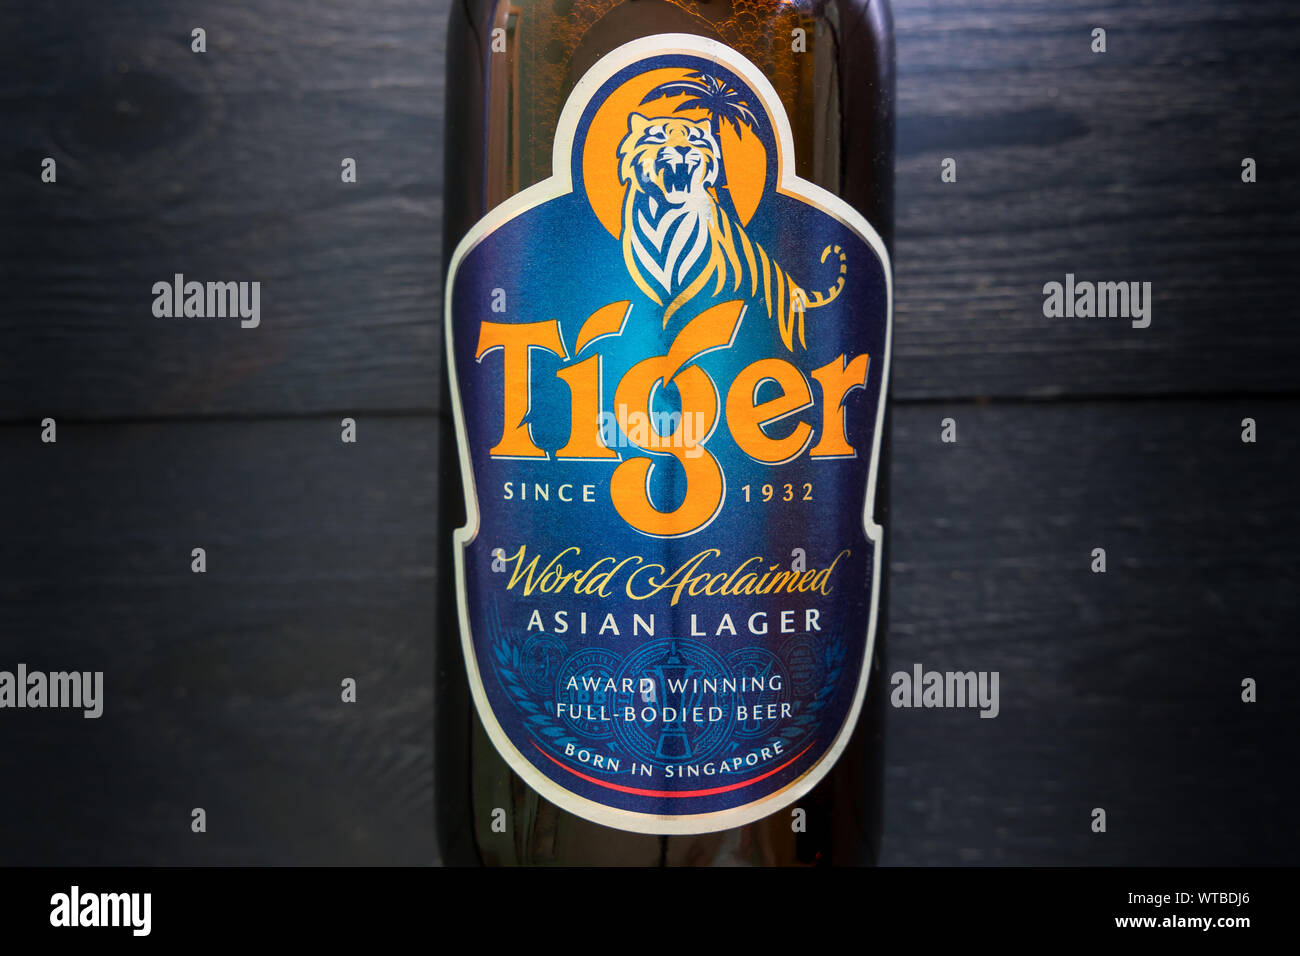 LONDON - SEPTEMBER 3, 2019: Tiger Asian lager beer bottle on dark wood background Stock Photo